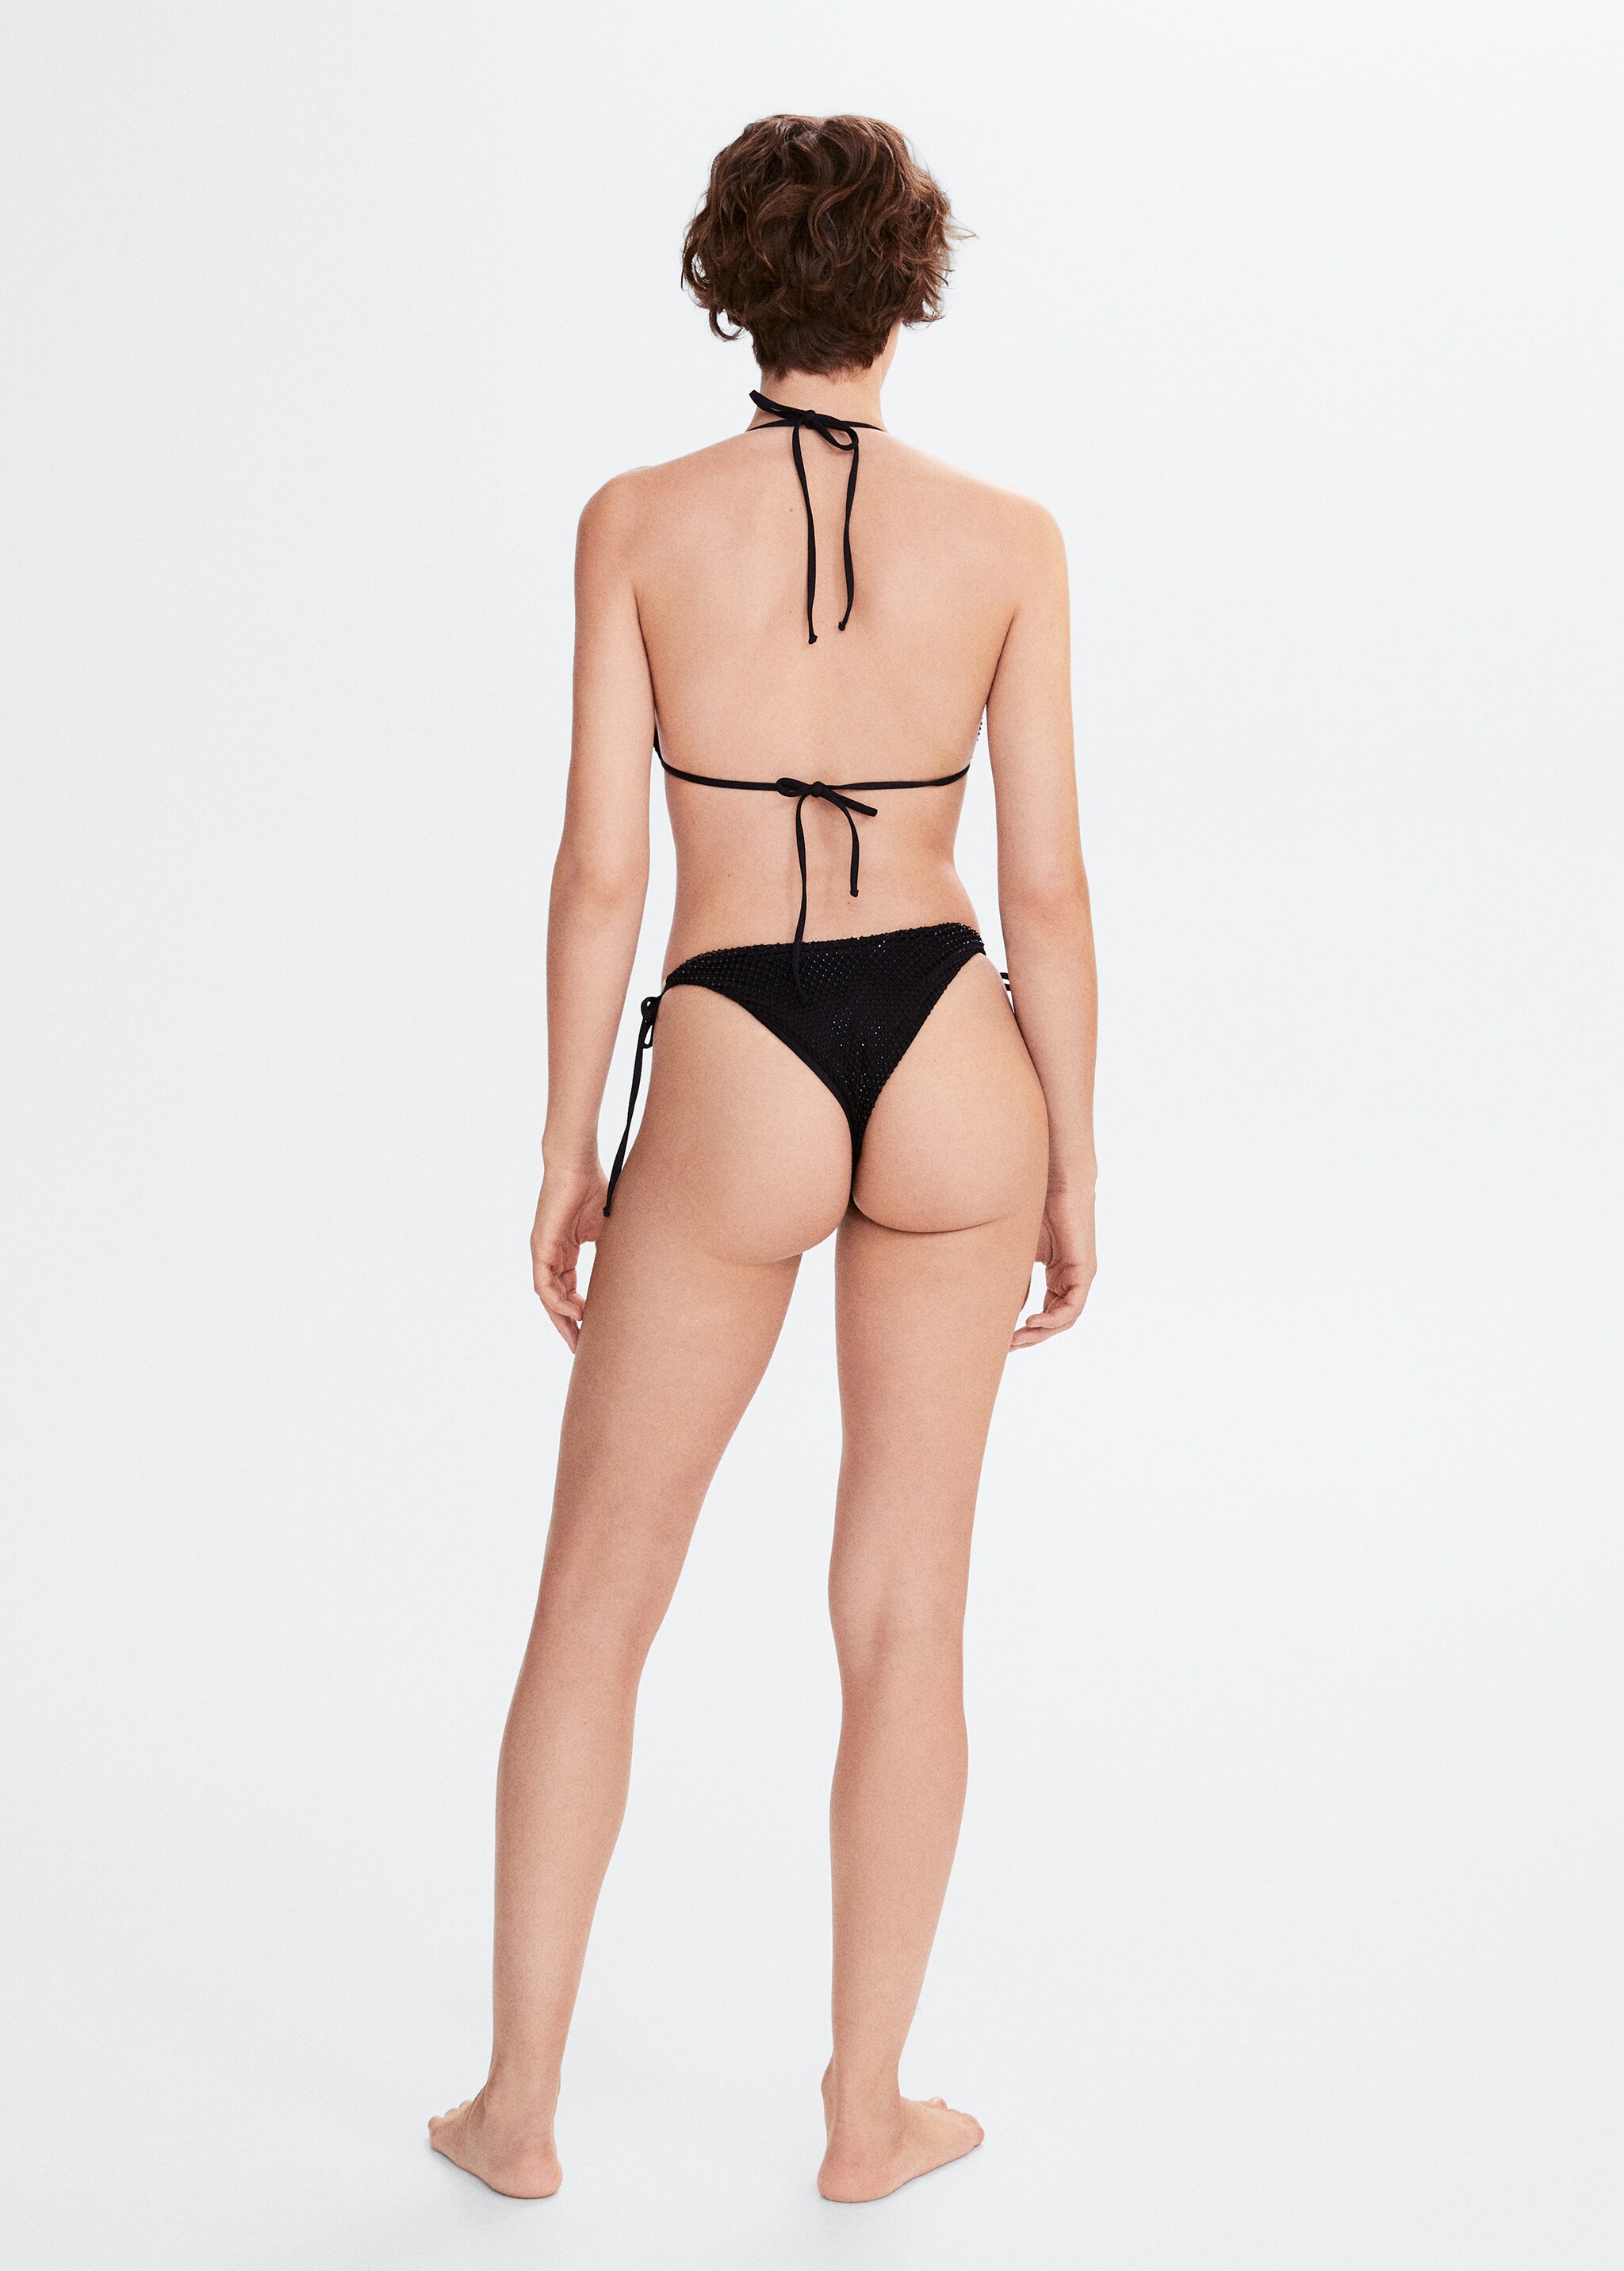 Rhinestone Brazilian bikini bottoms - Reverse of the article